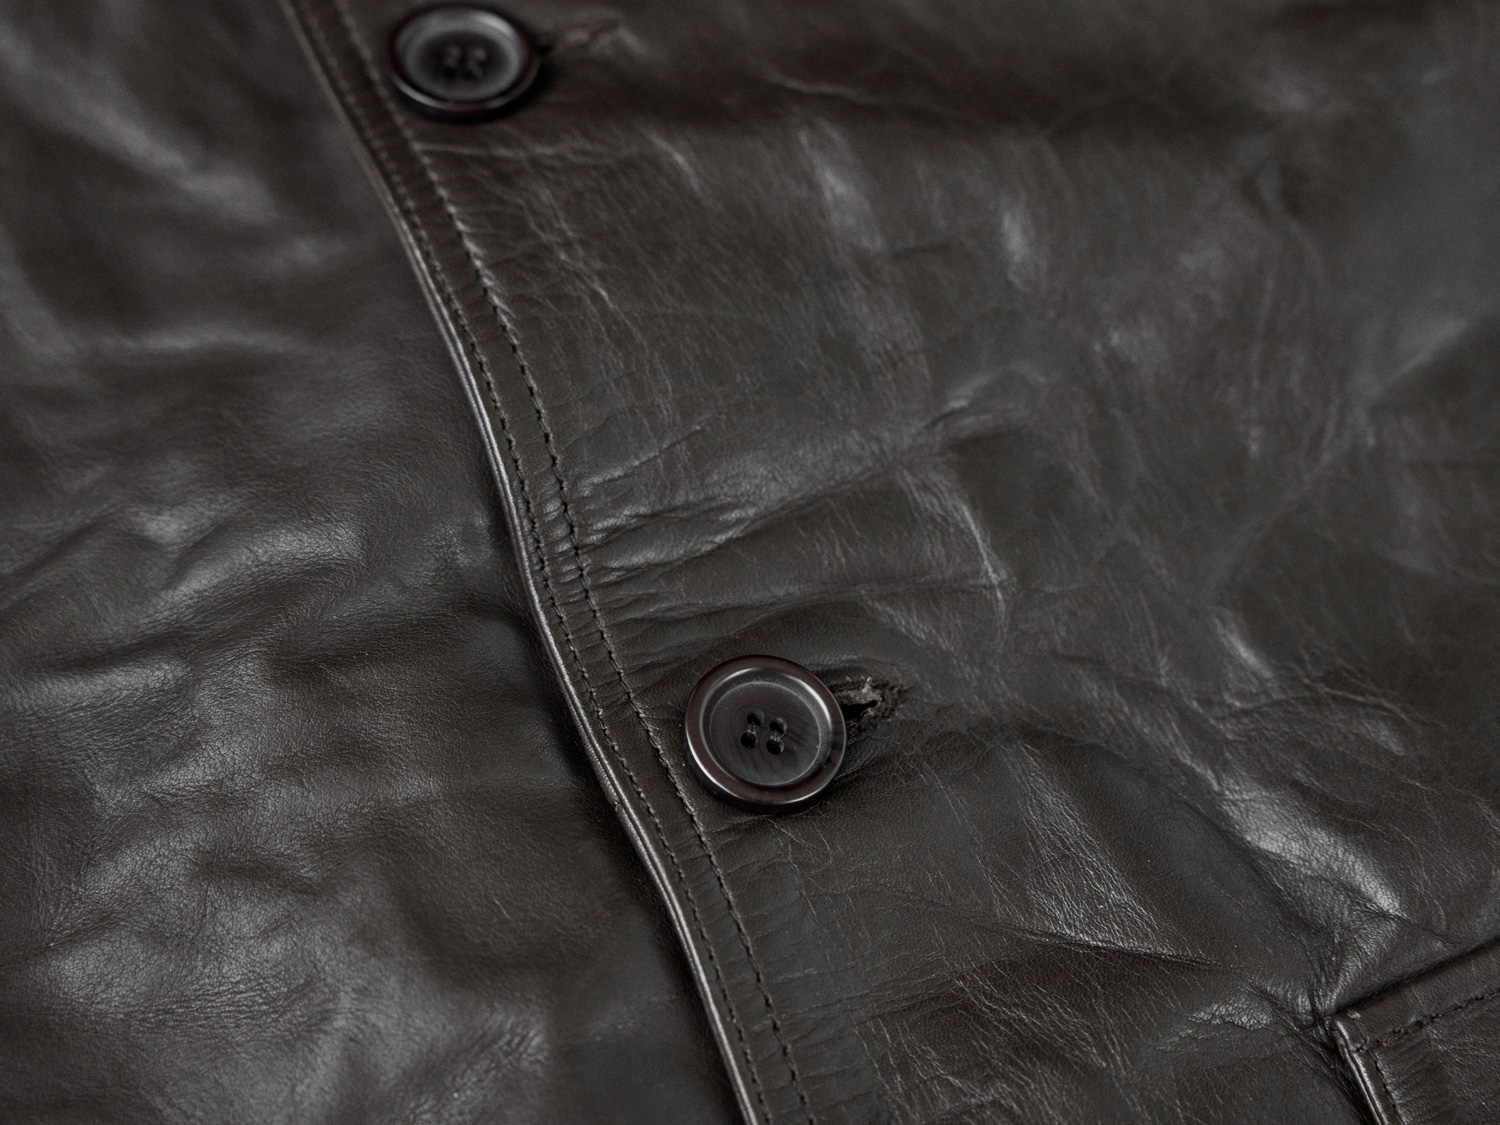 A1 Fashion Goods Womens Leather Biker Jacket